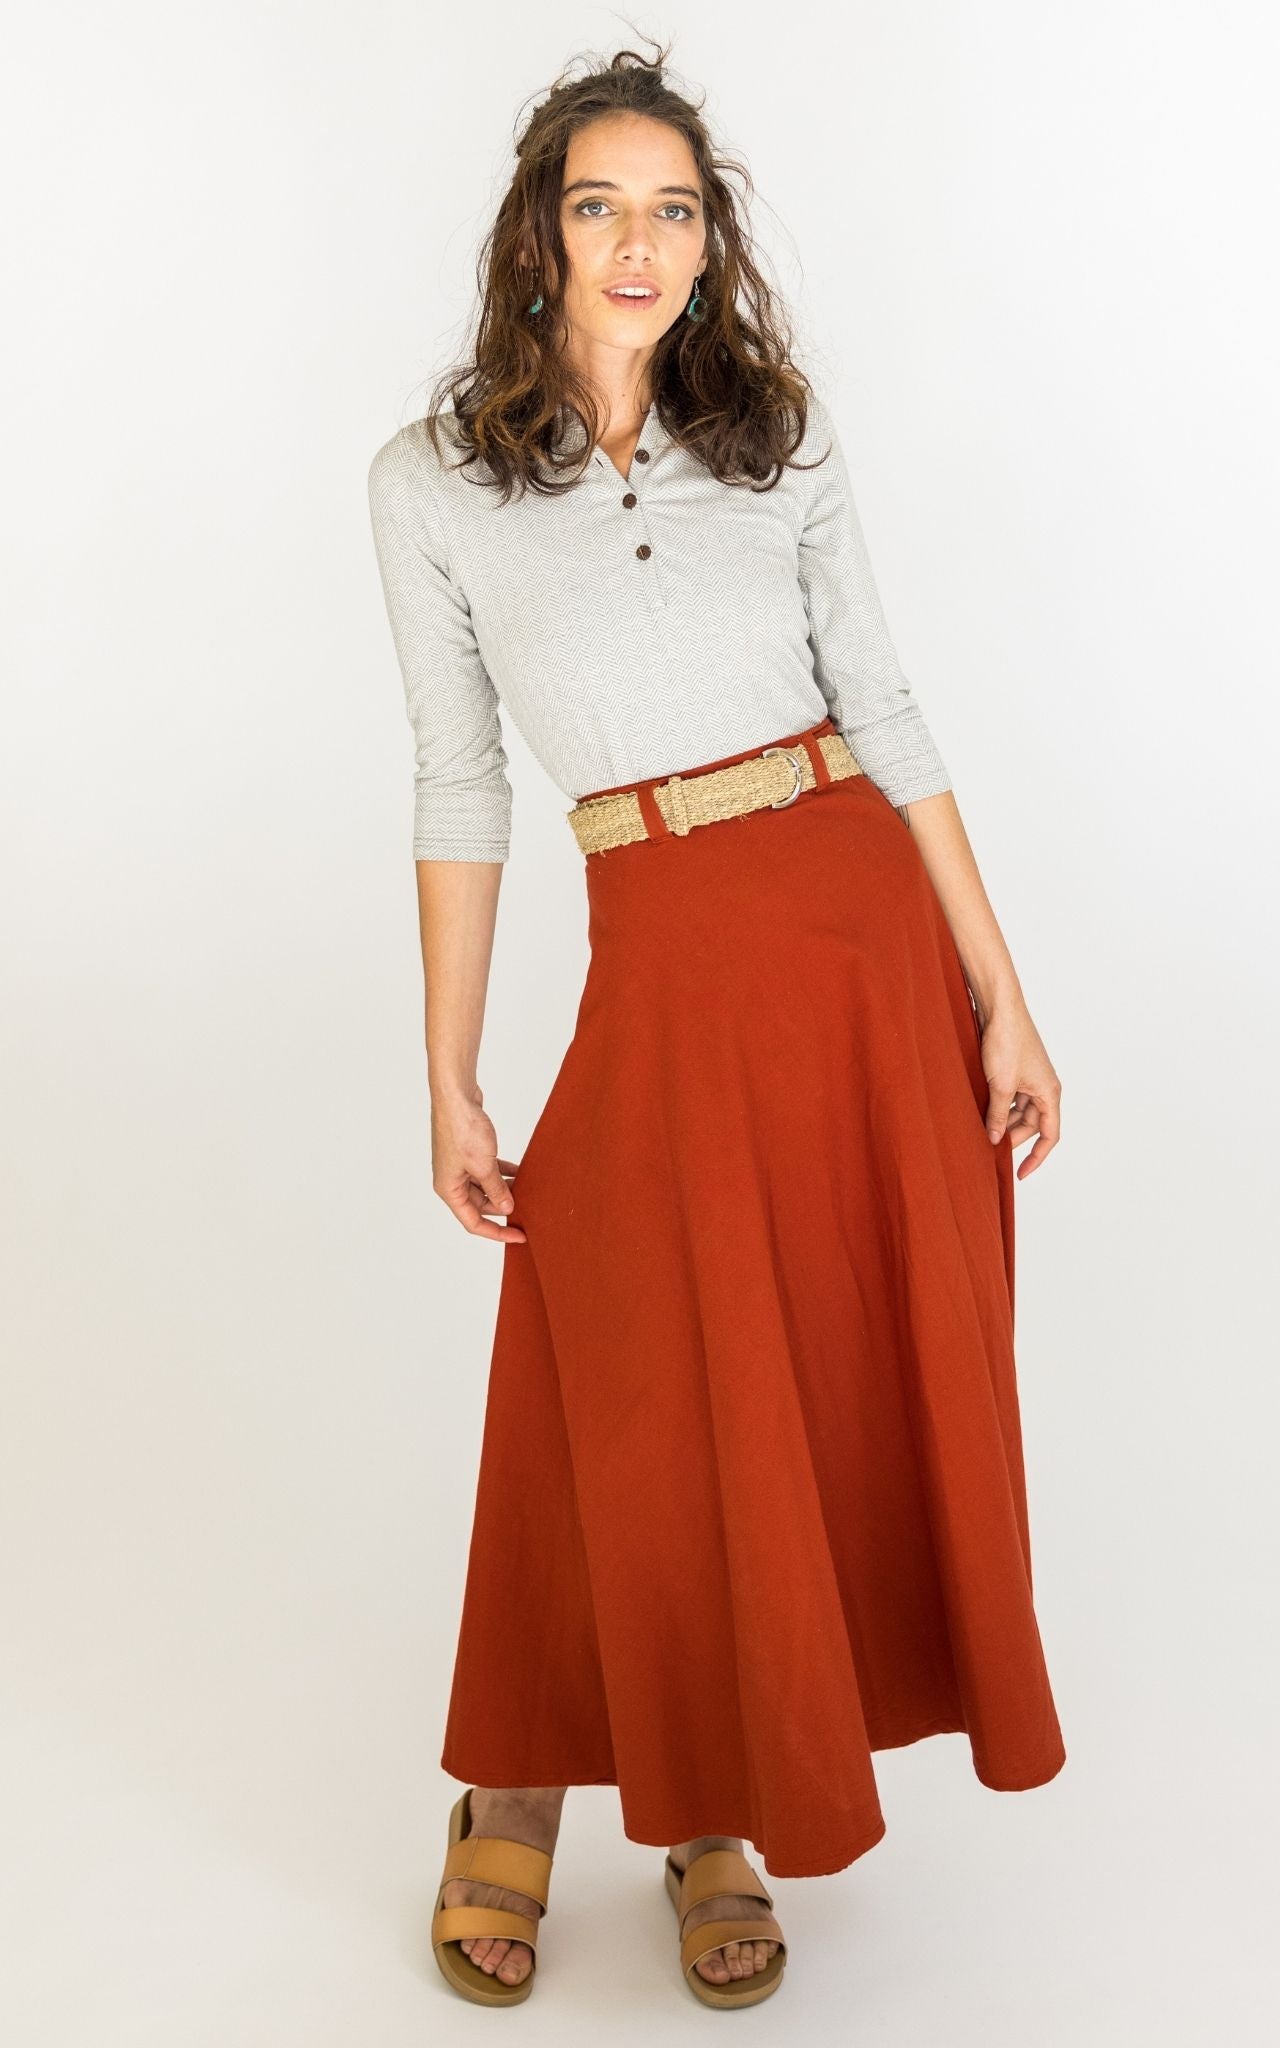 Surya Australia Ethical Cotton Wrap Skirt from Nepal - Rust